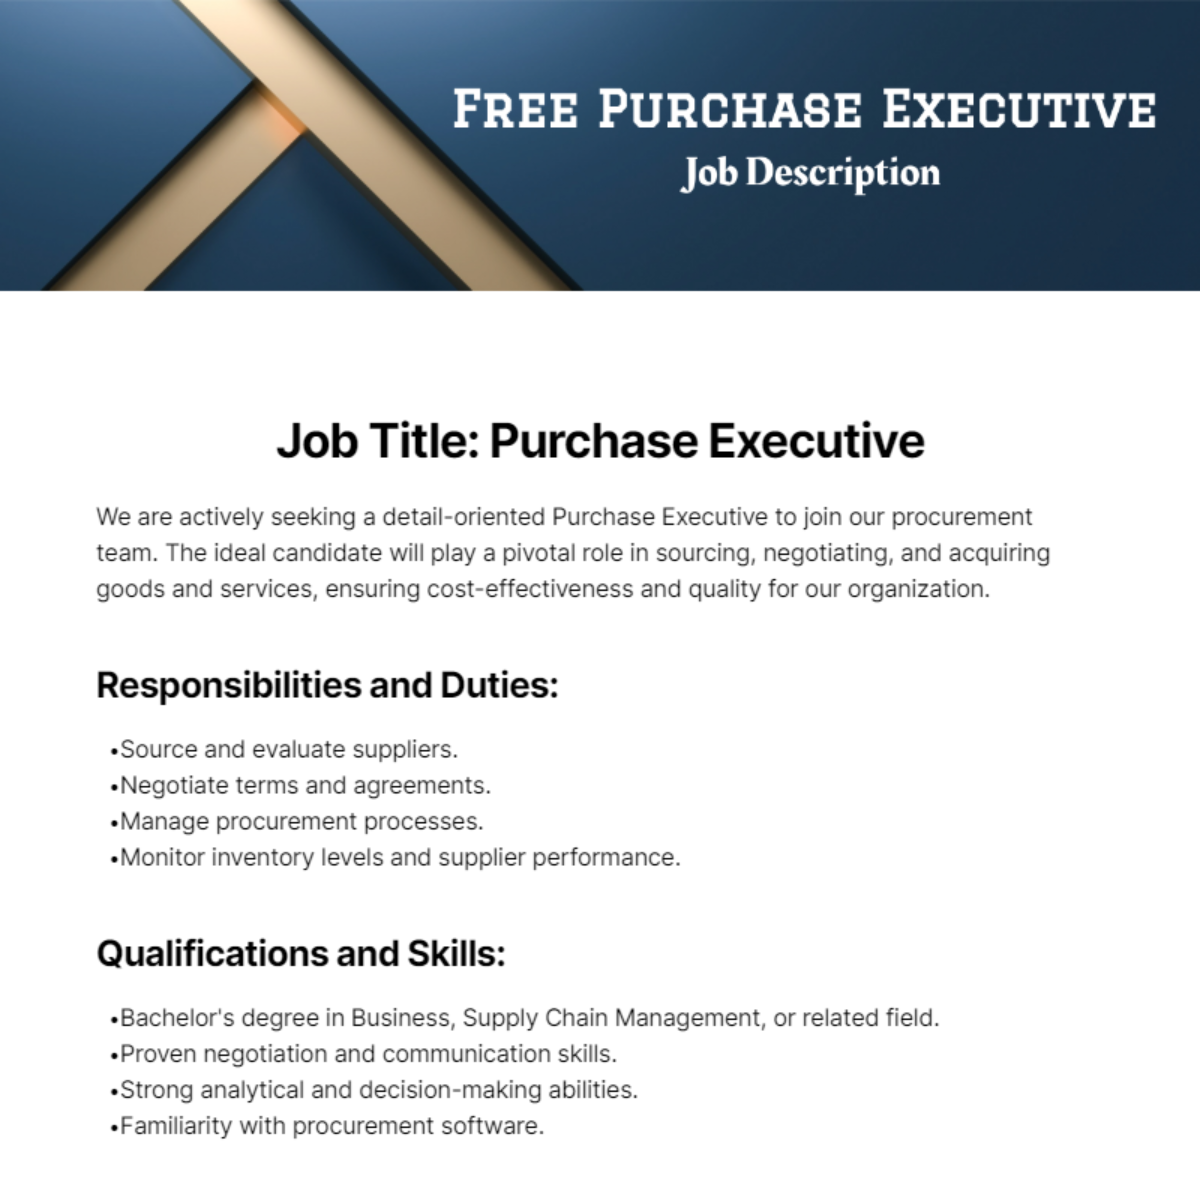 Free Purchase Executive Job Description Template